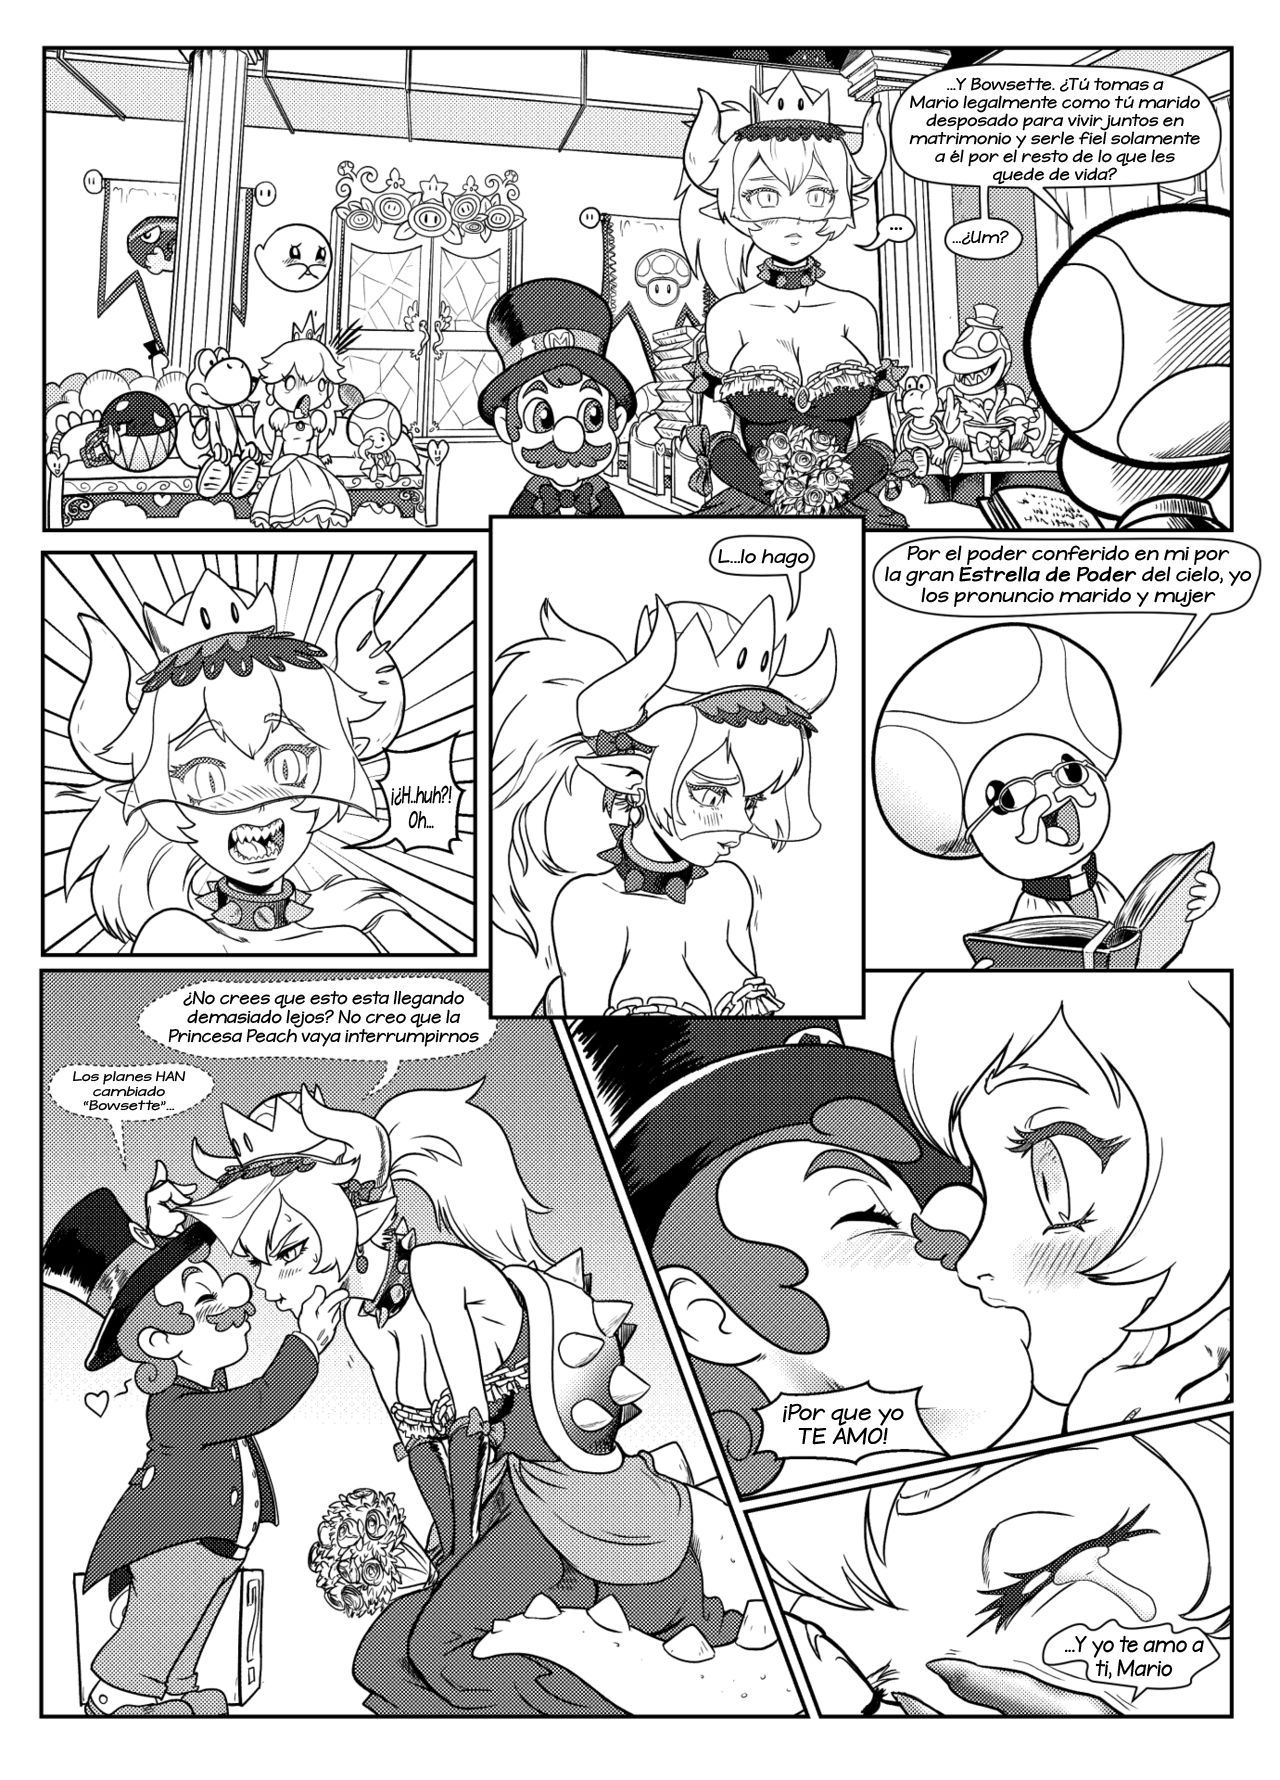 [Pencils] Bowsette comic (Mario Bros.) [Spanish] by Arkoniusx 2